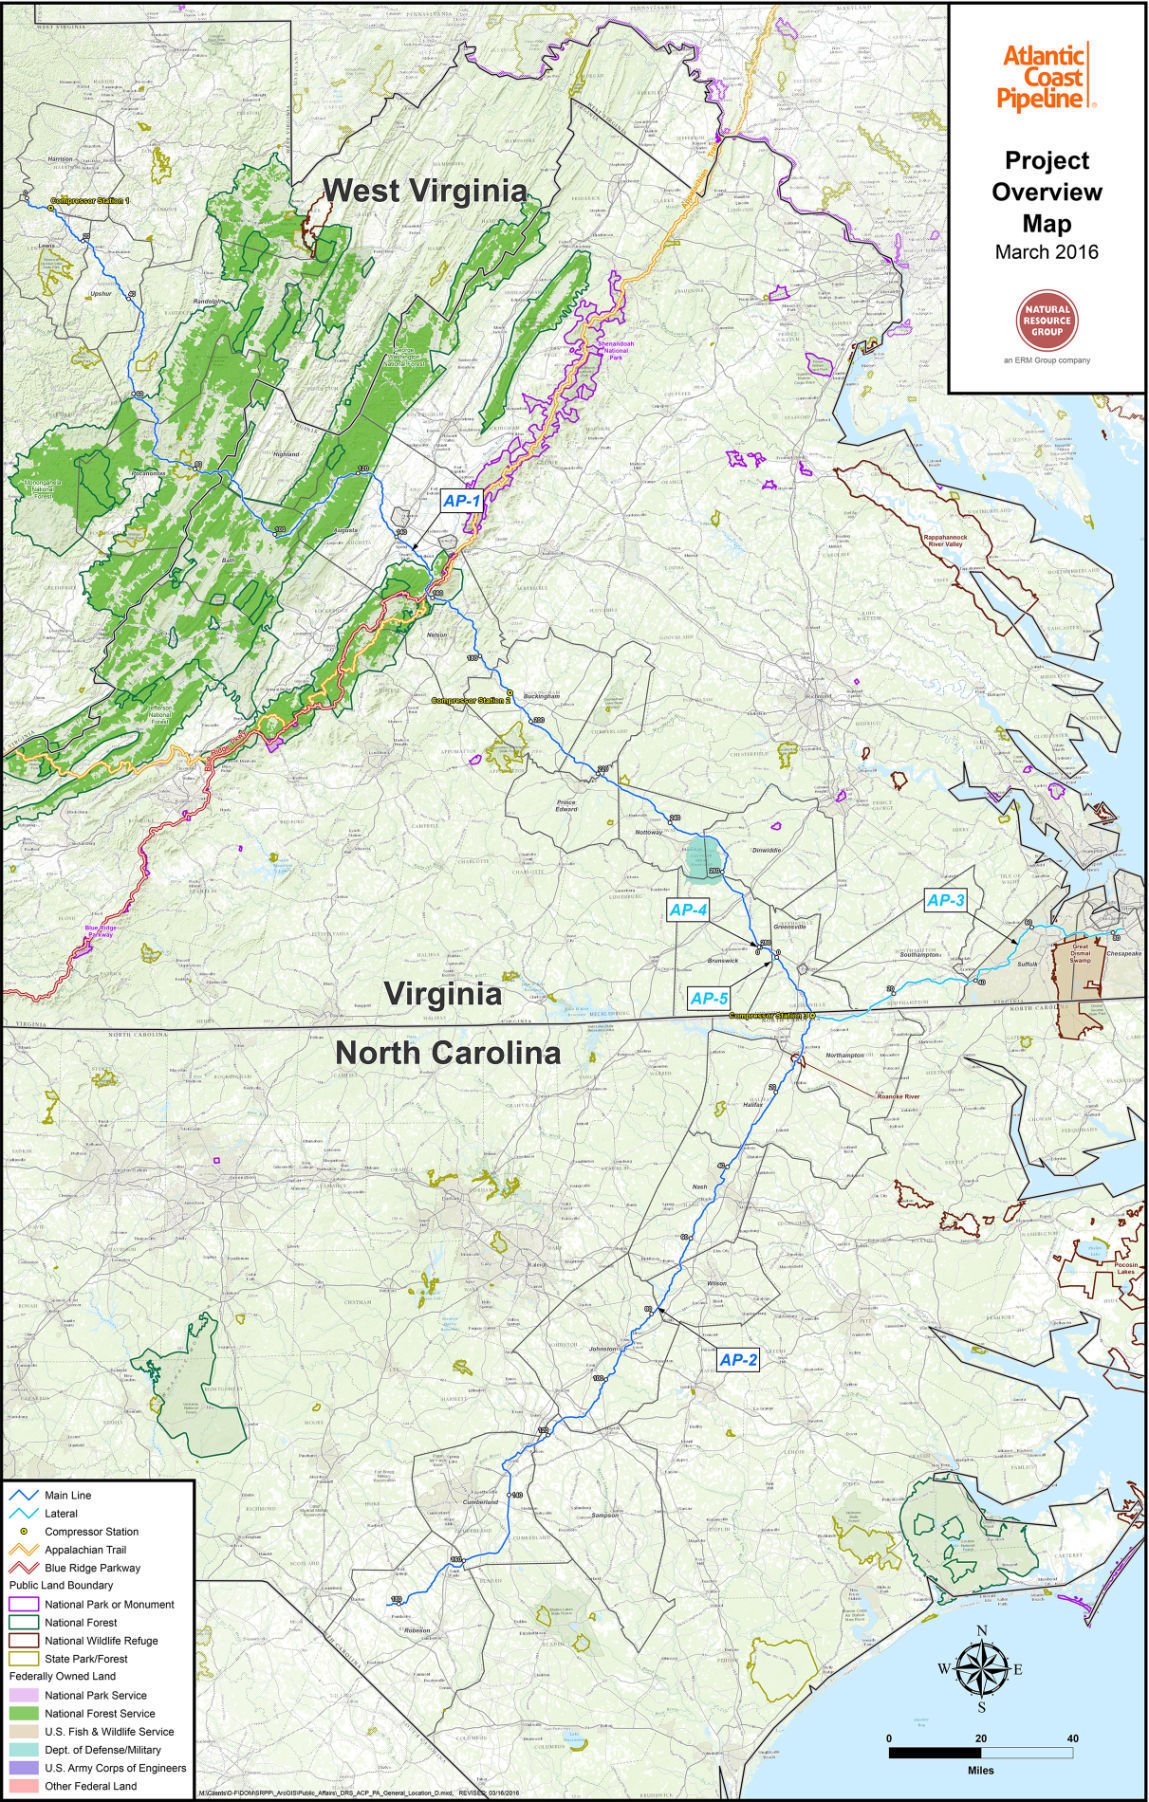 Atlantic Coast Pipeline tops regional economic development projects | Local | wvnews.com